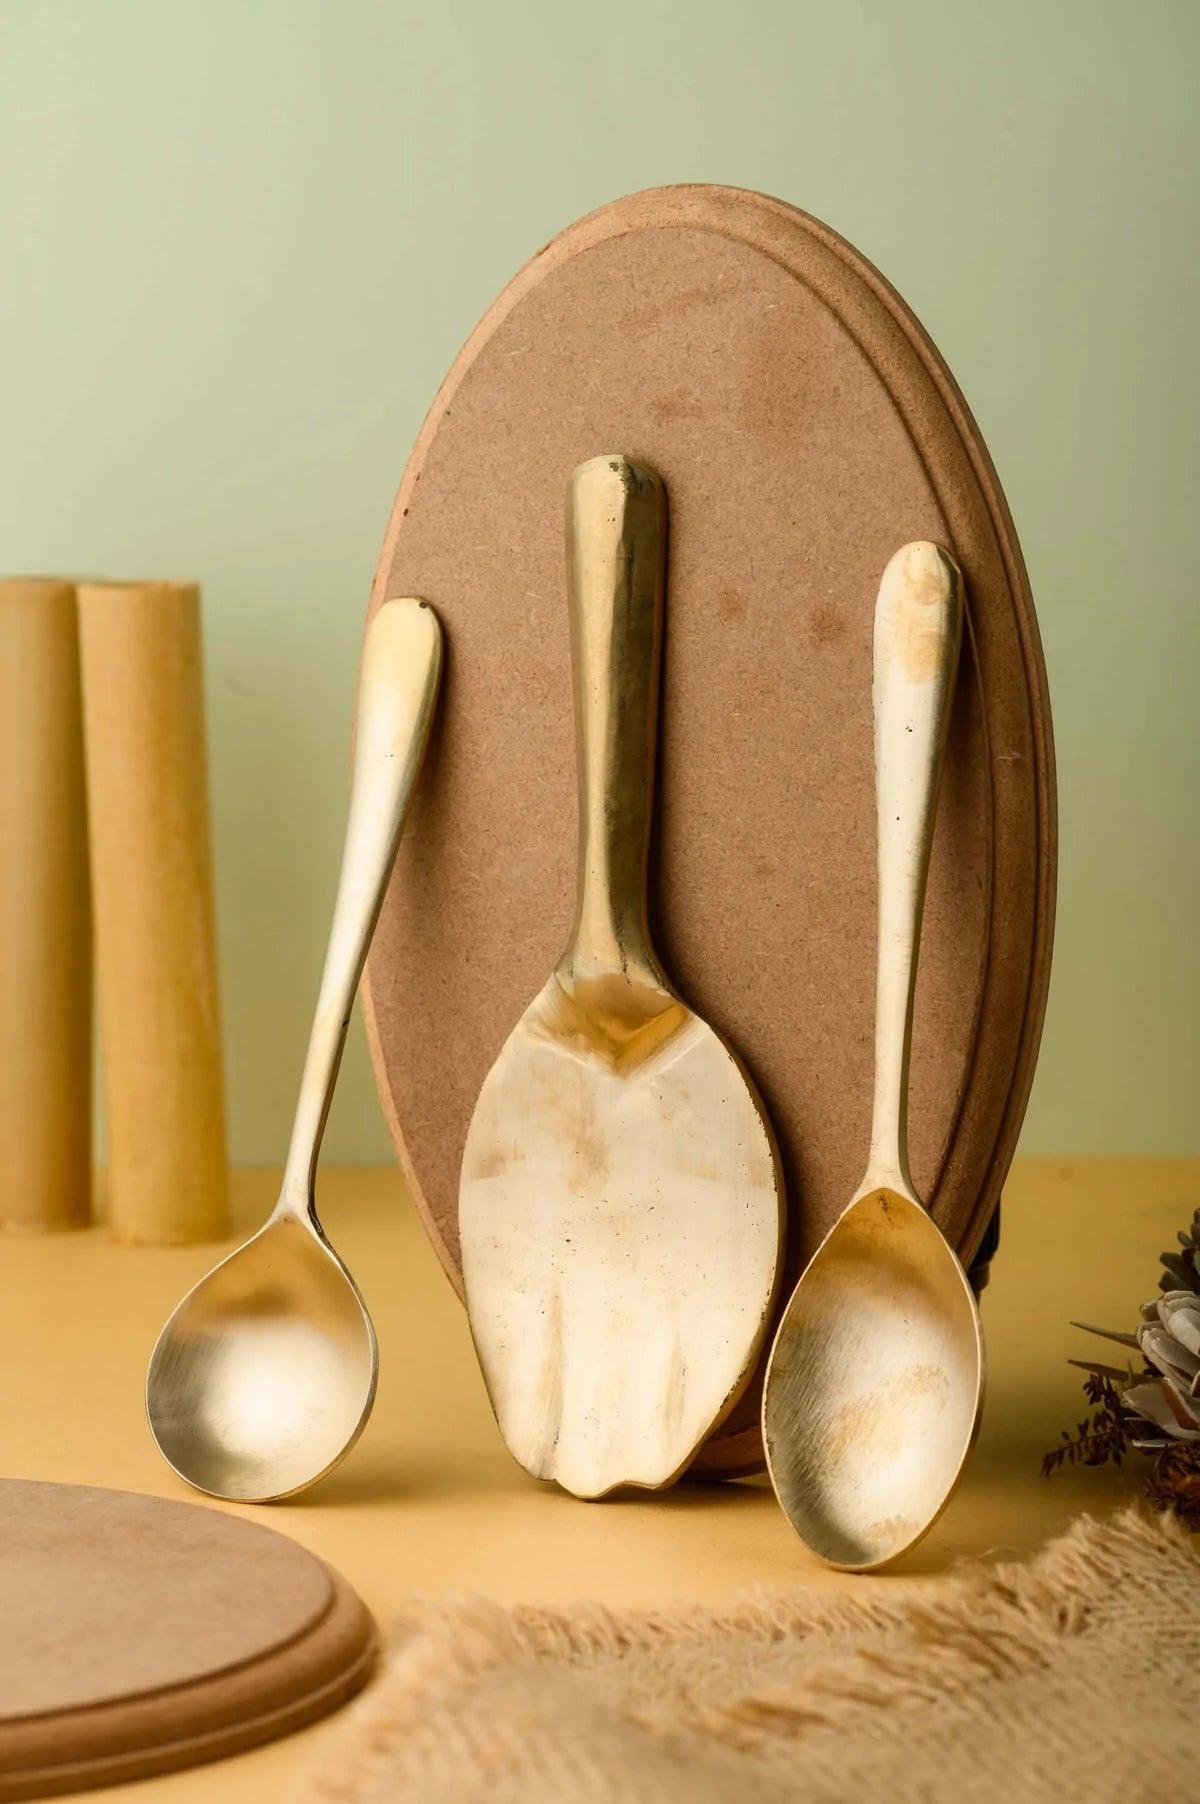 Kansa (Bronze) Mini Spoon